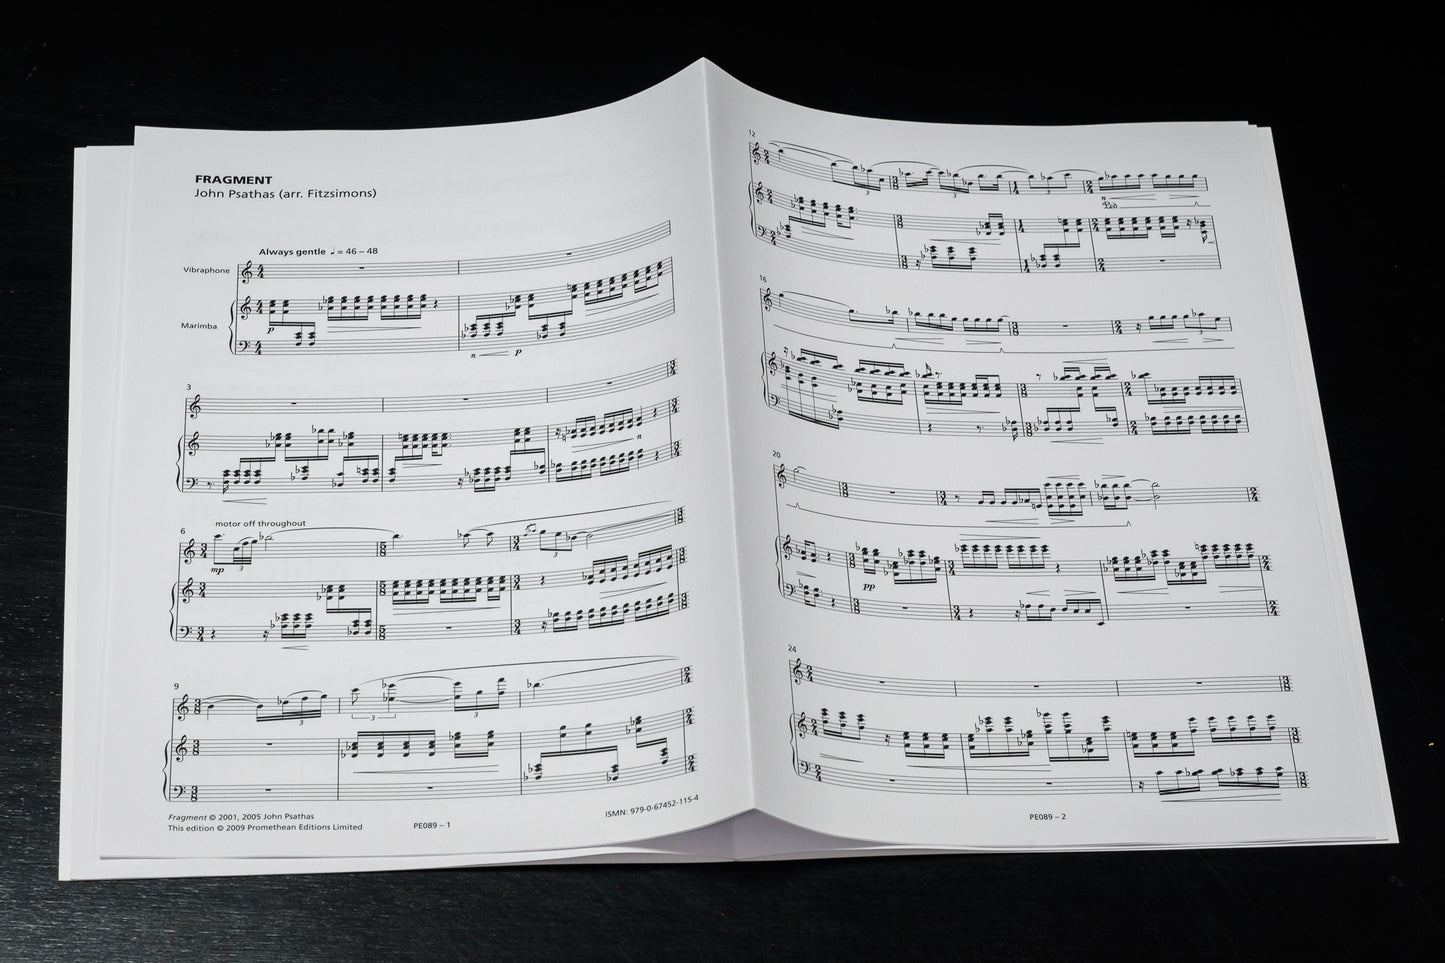 Fragment (Marimba and Vibraphone)